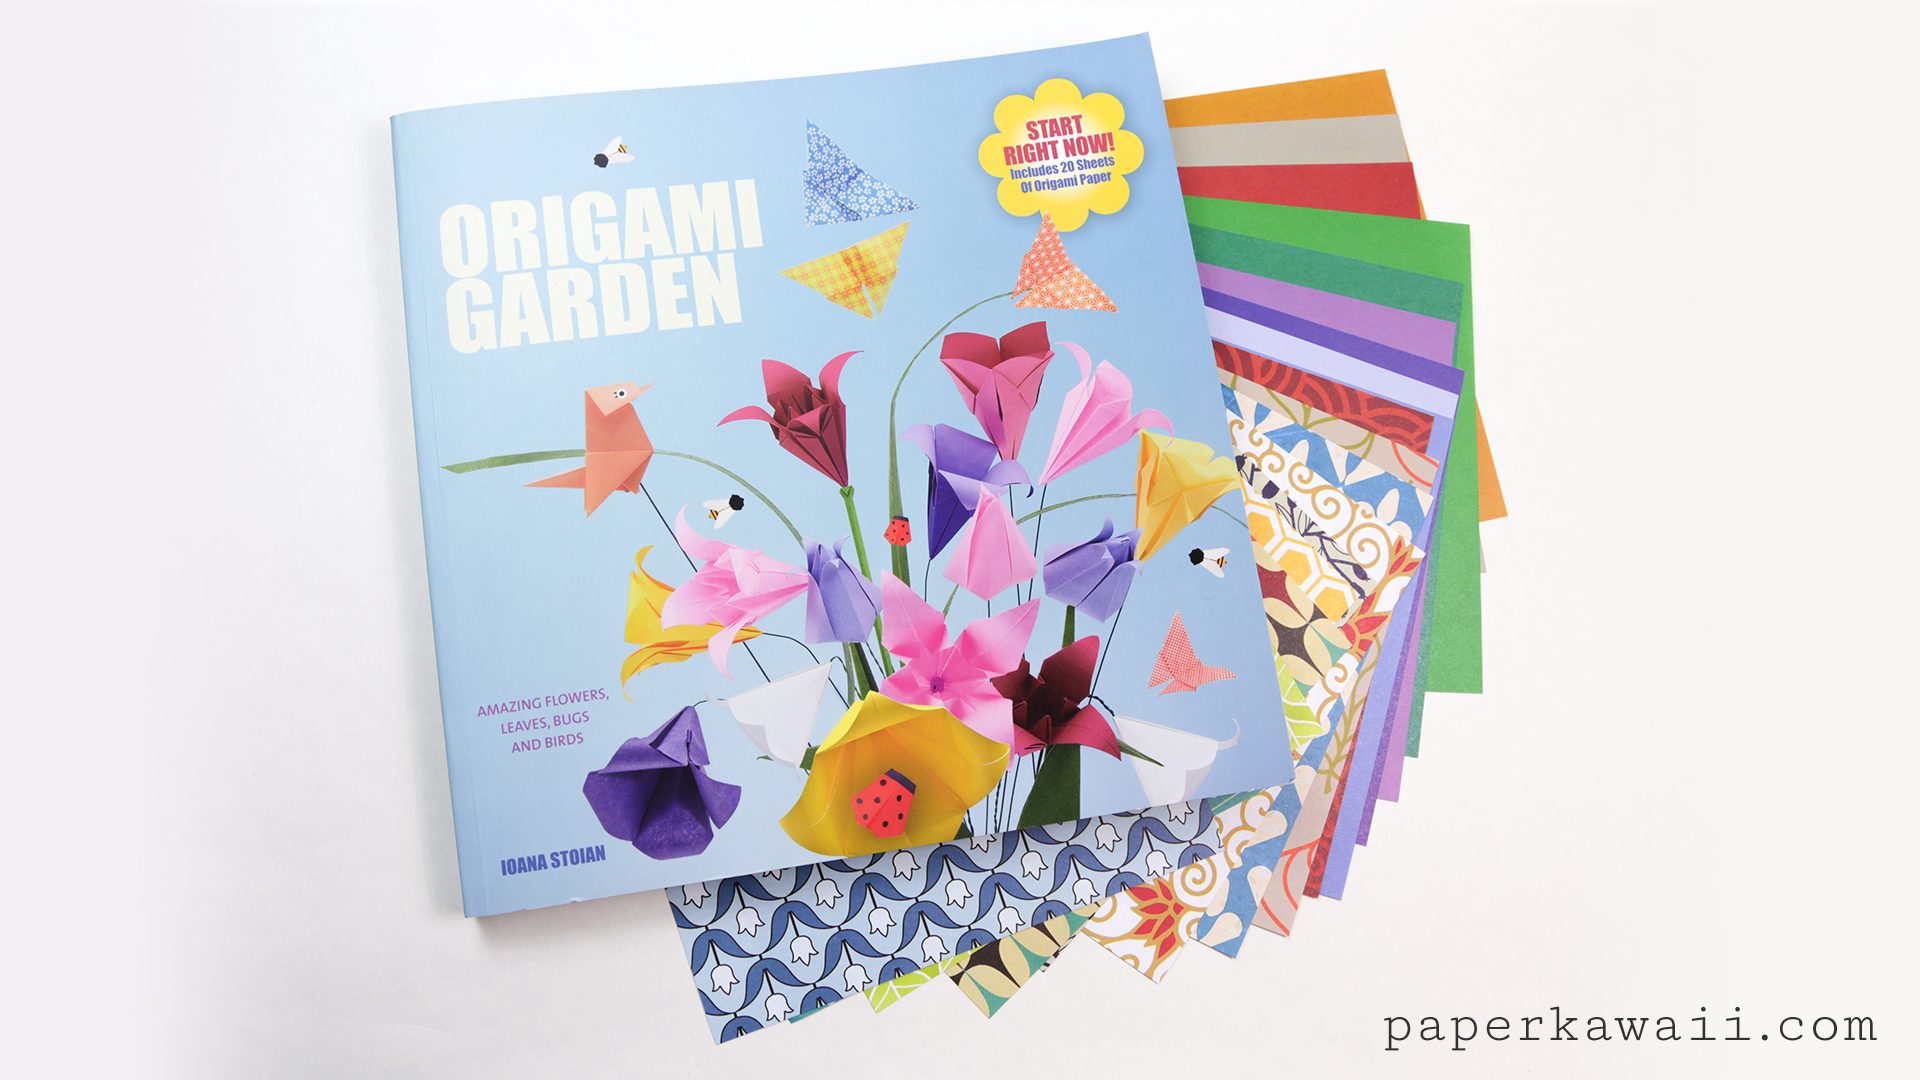 The Origami Garden Ioana Stoian Book 02